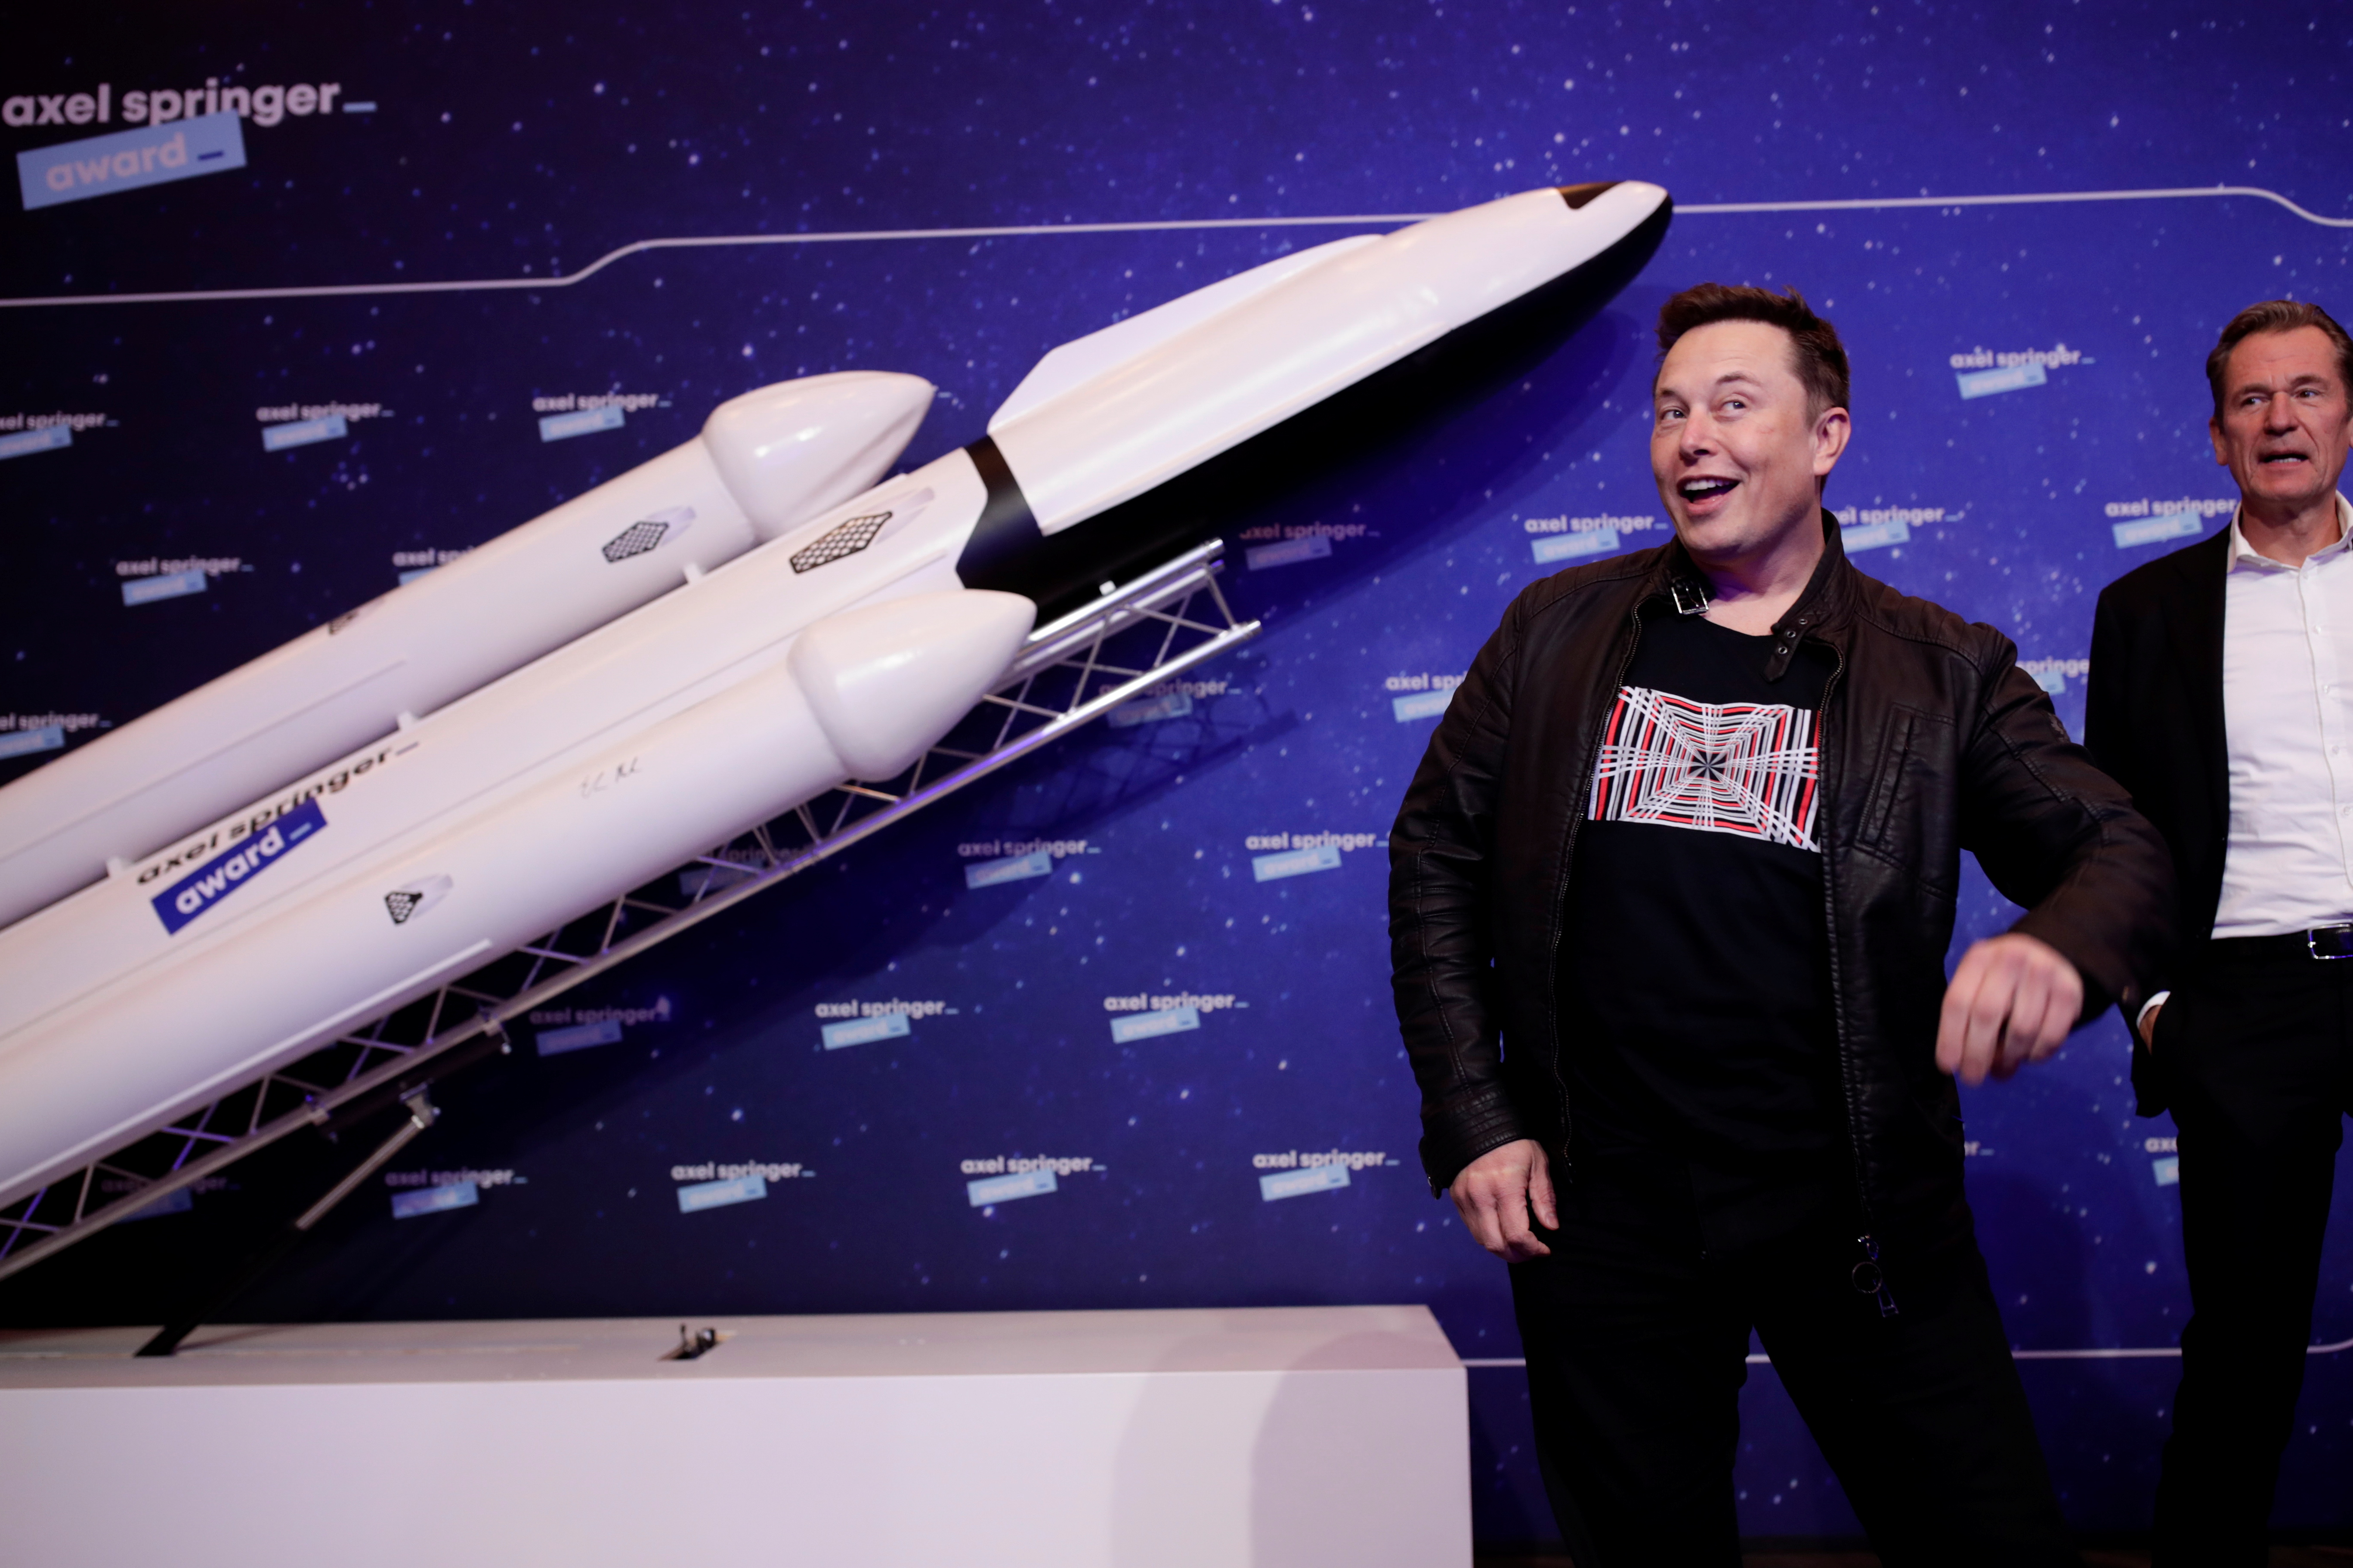 Tras superar a Jeff Bezoz, Elon Musk se convirtió en el hombre más rico del mundo (Foto: Reuters / Hannibal Hanschke)